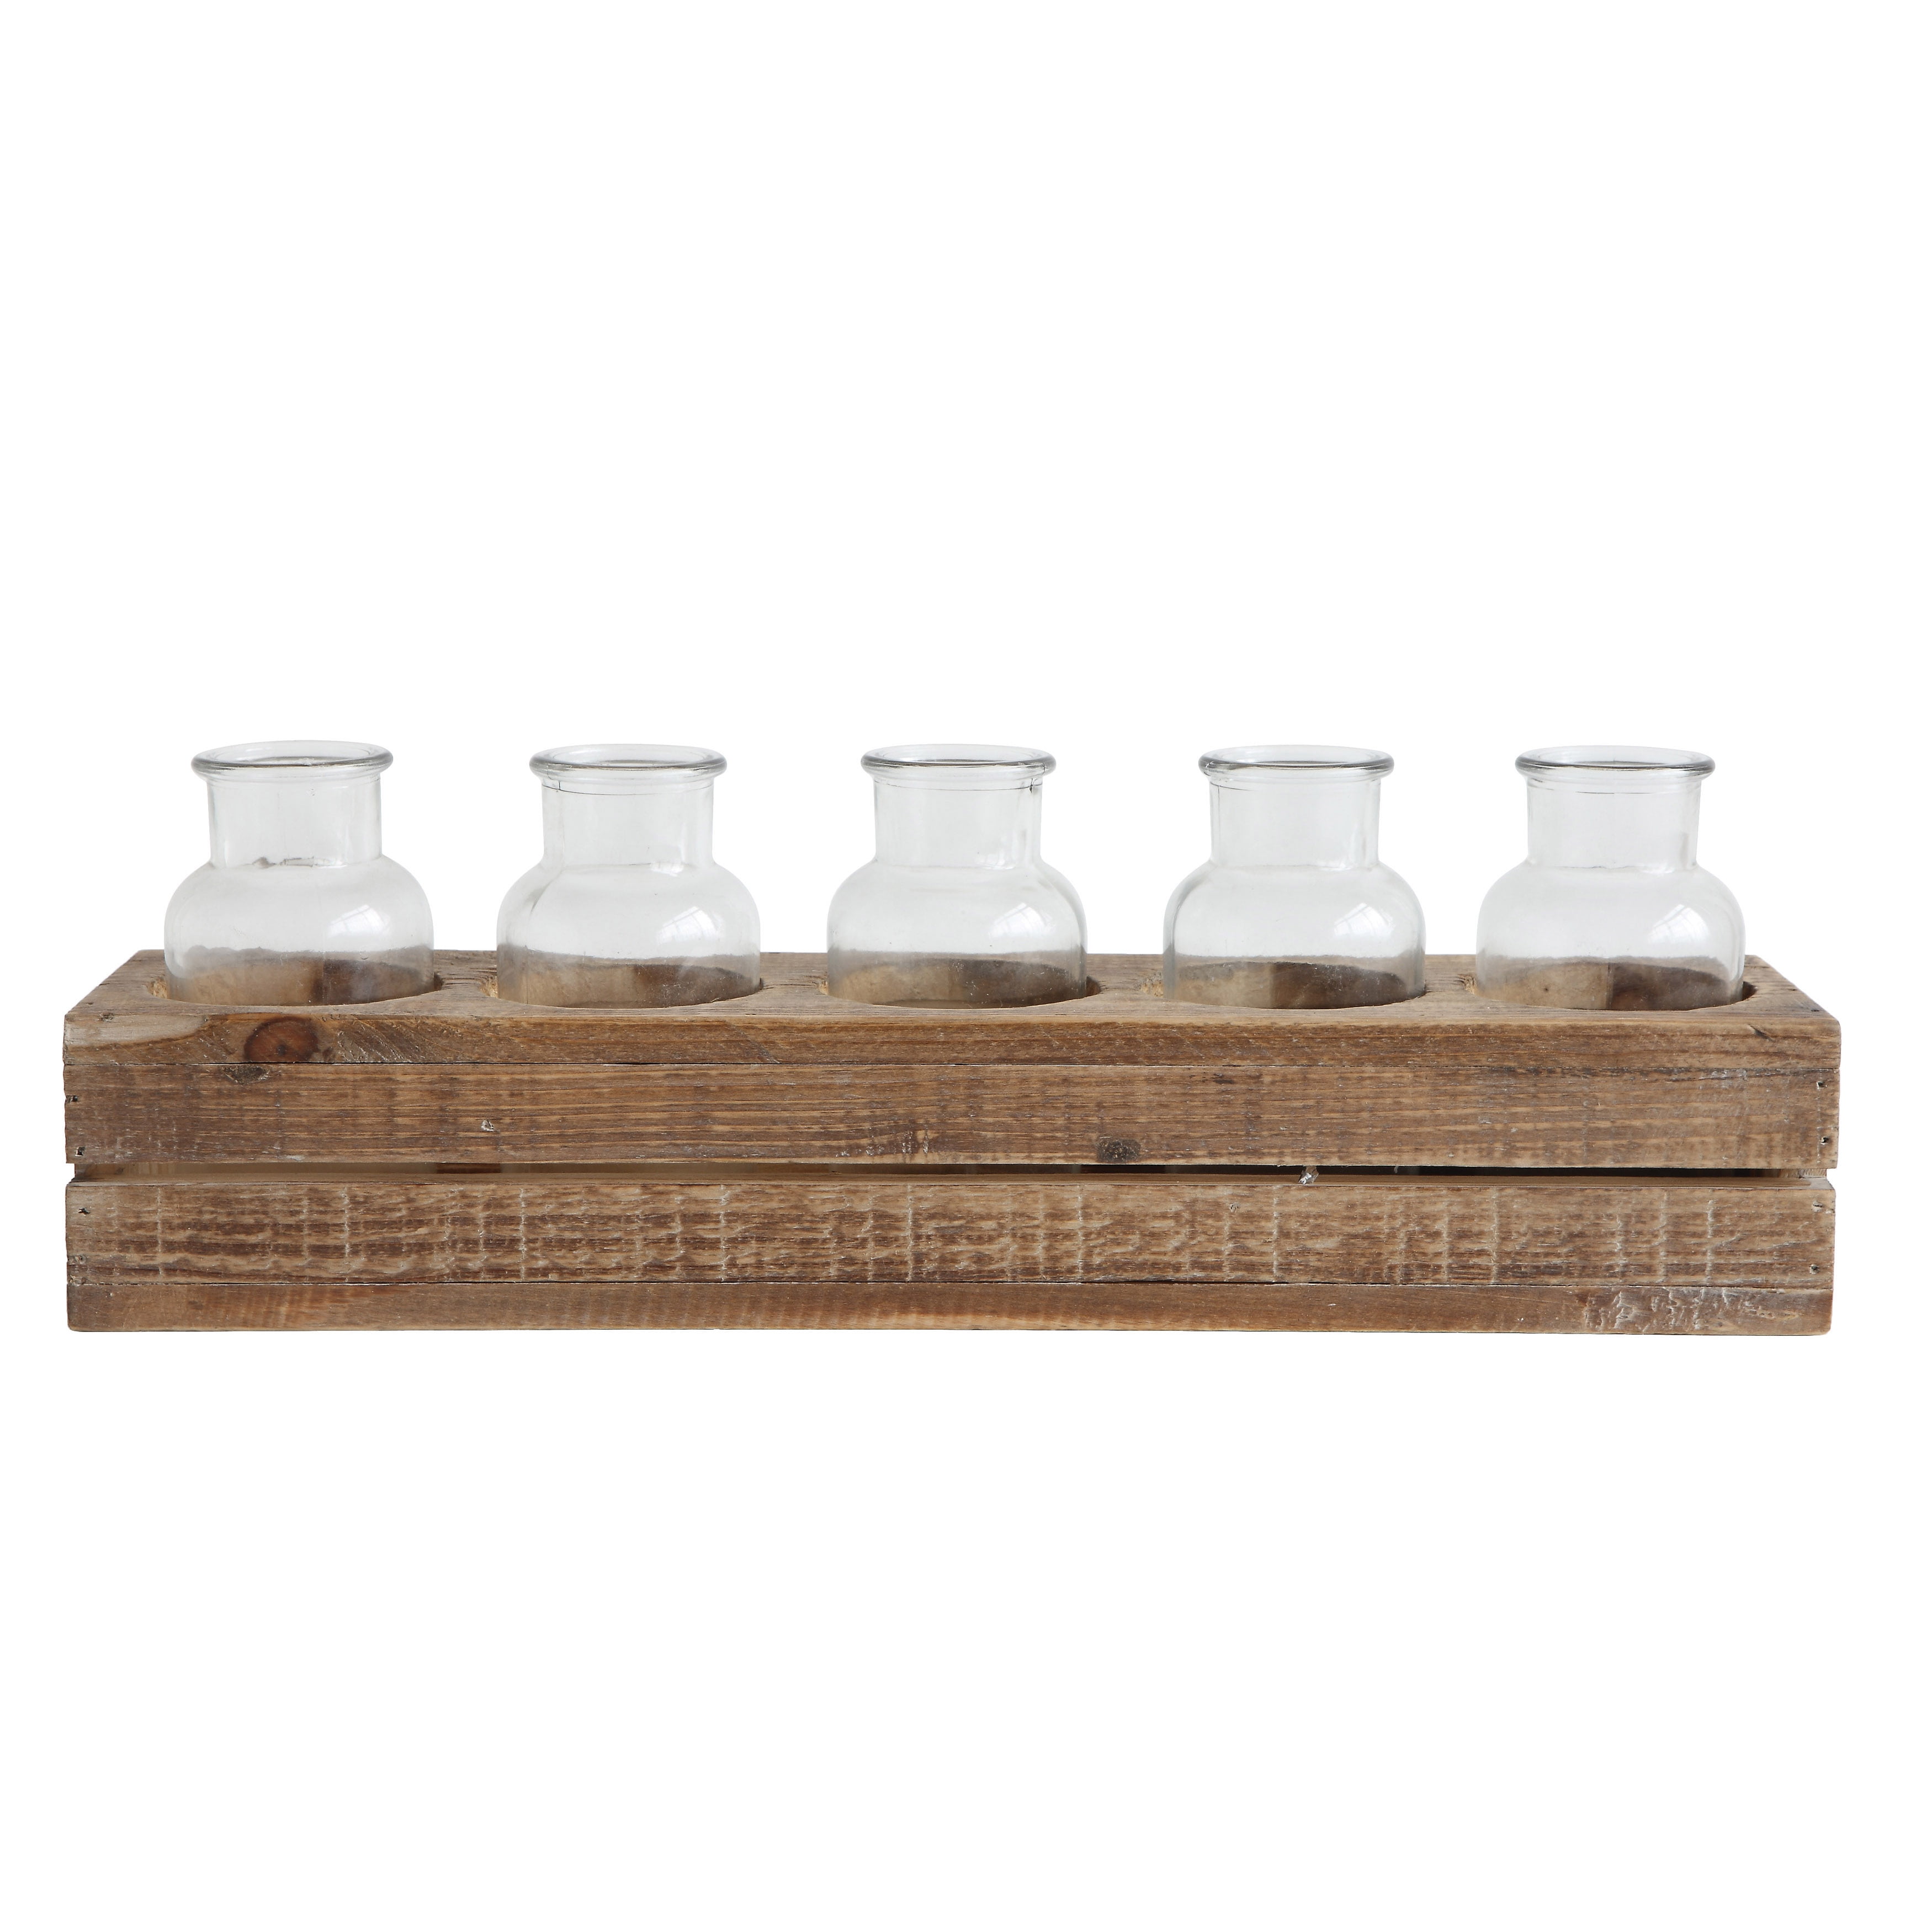 3R Studios Decorative Wood Crate With 5 Glass Bottles - Walmart.com